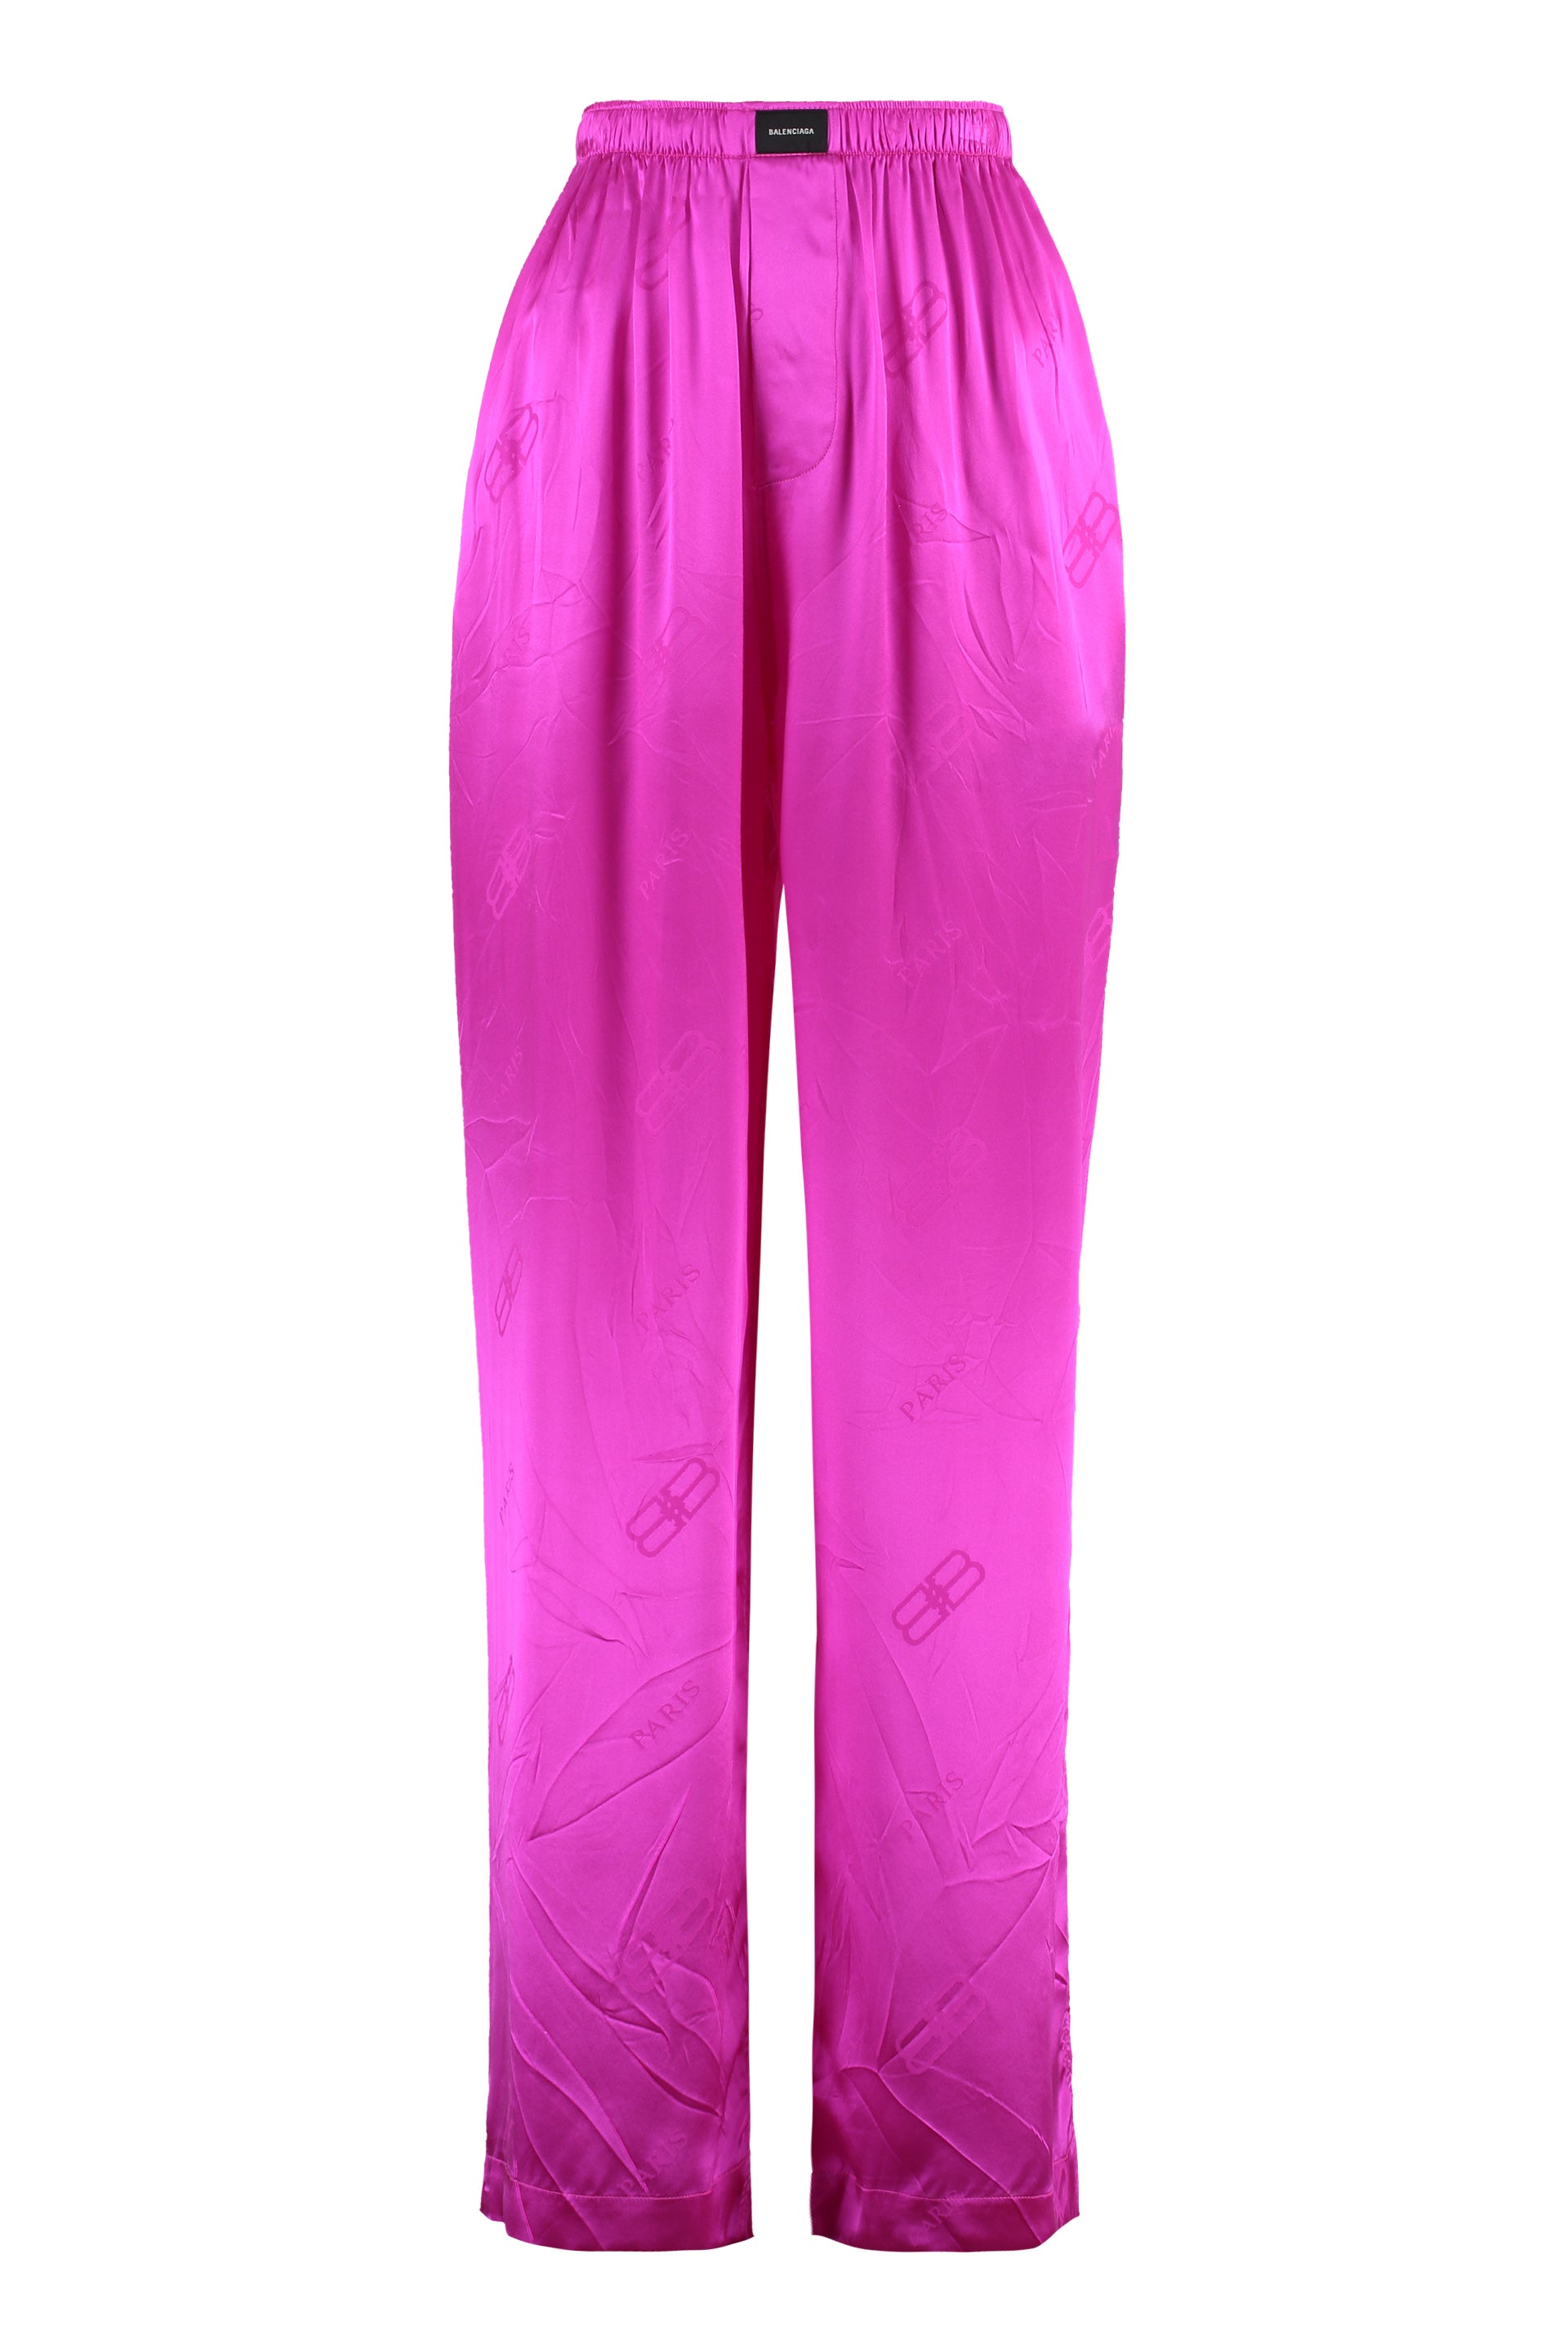 Shop Balenciaga Silk Pajama Pants In Fuchsia For Women